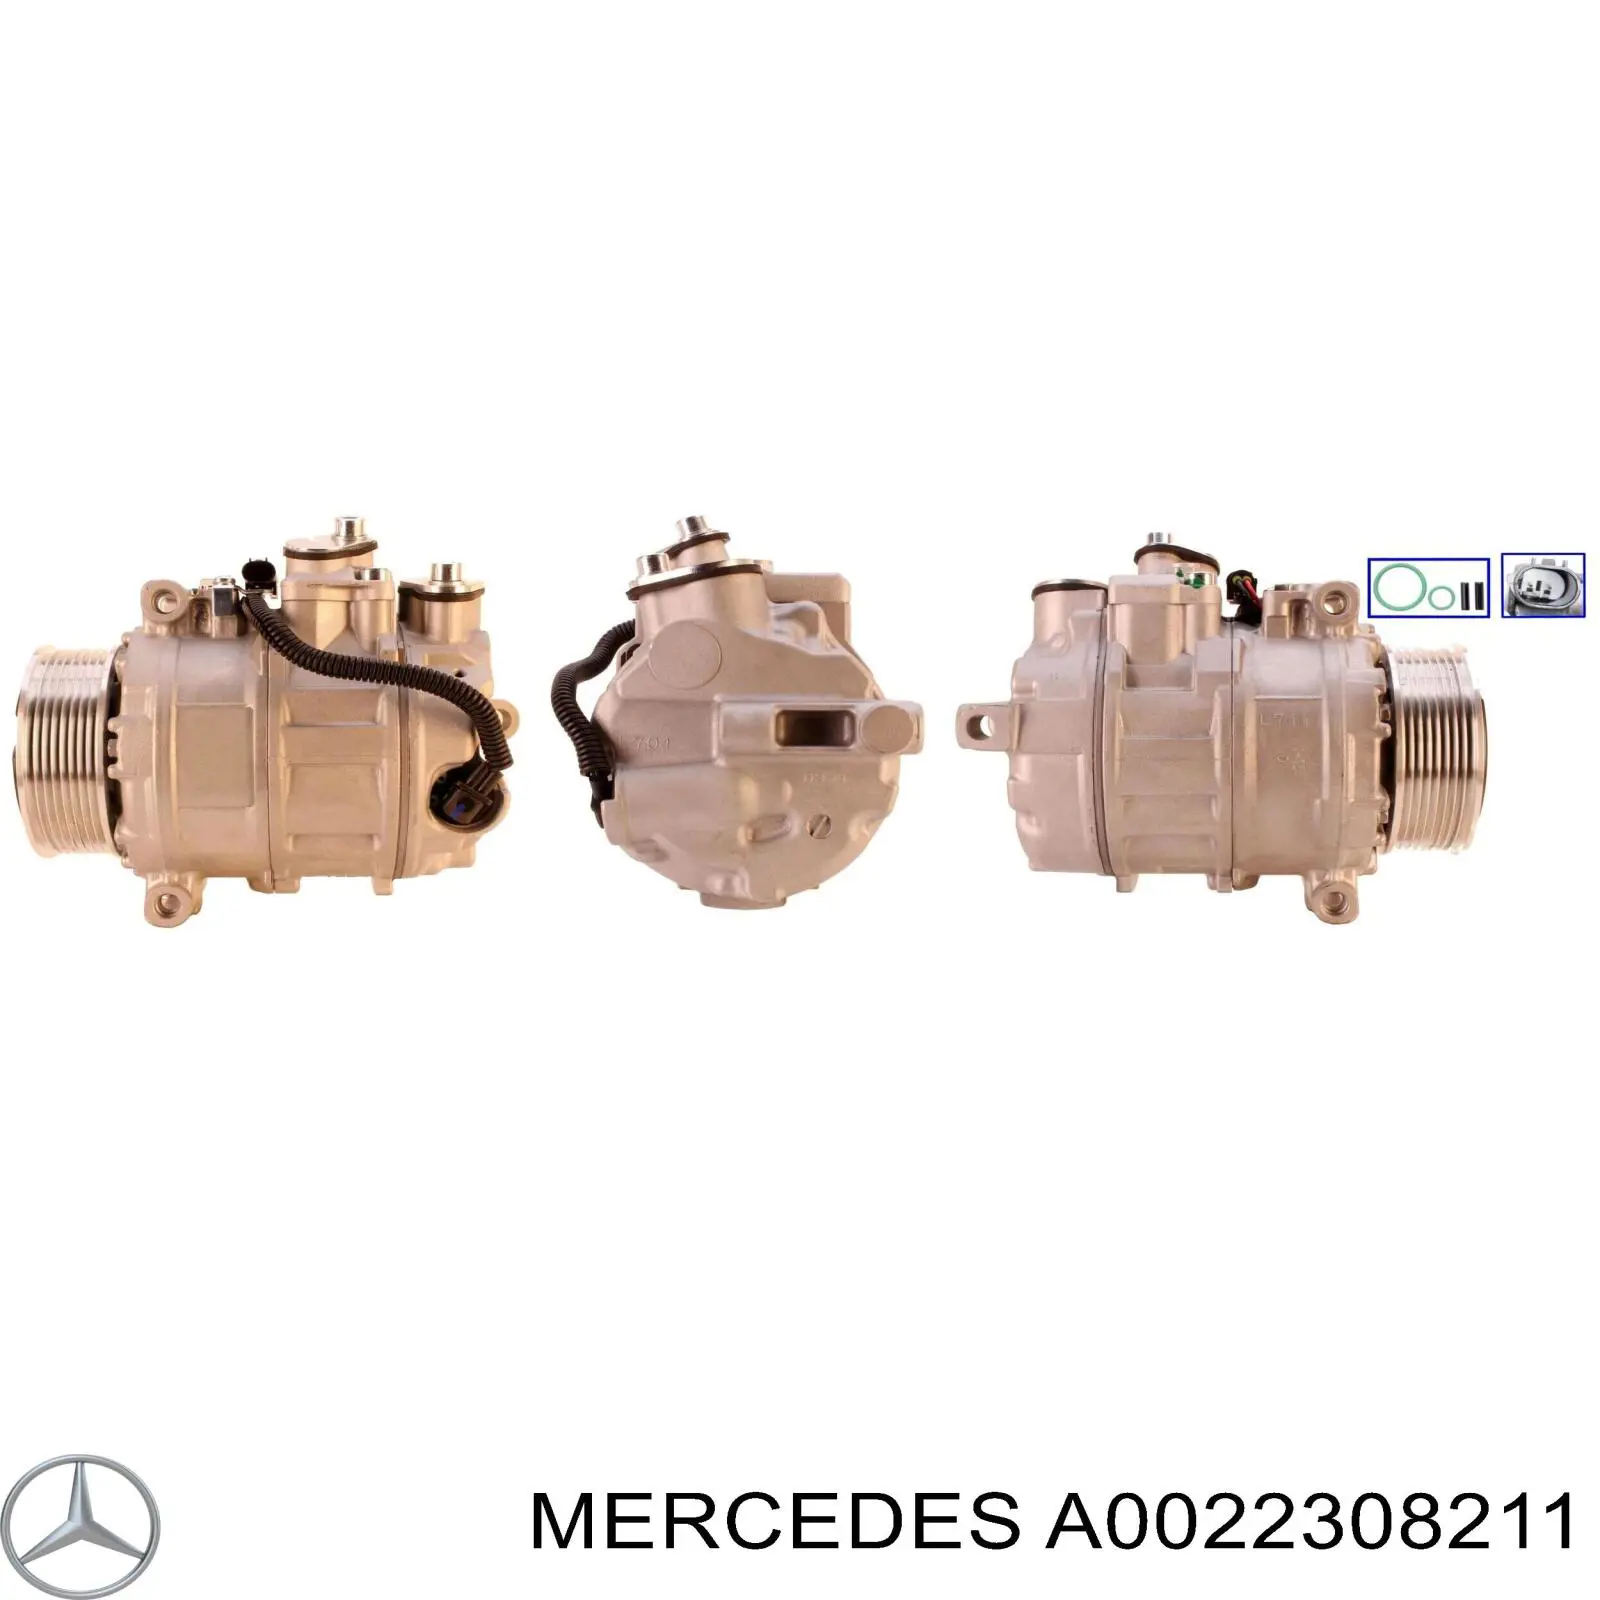 A0022308211 Mercedes compresor de aire acondicionado